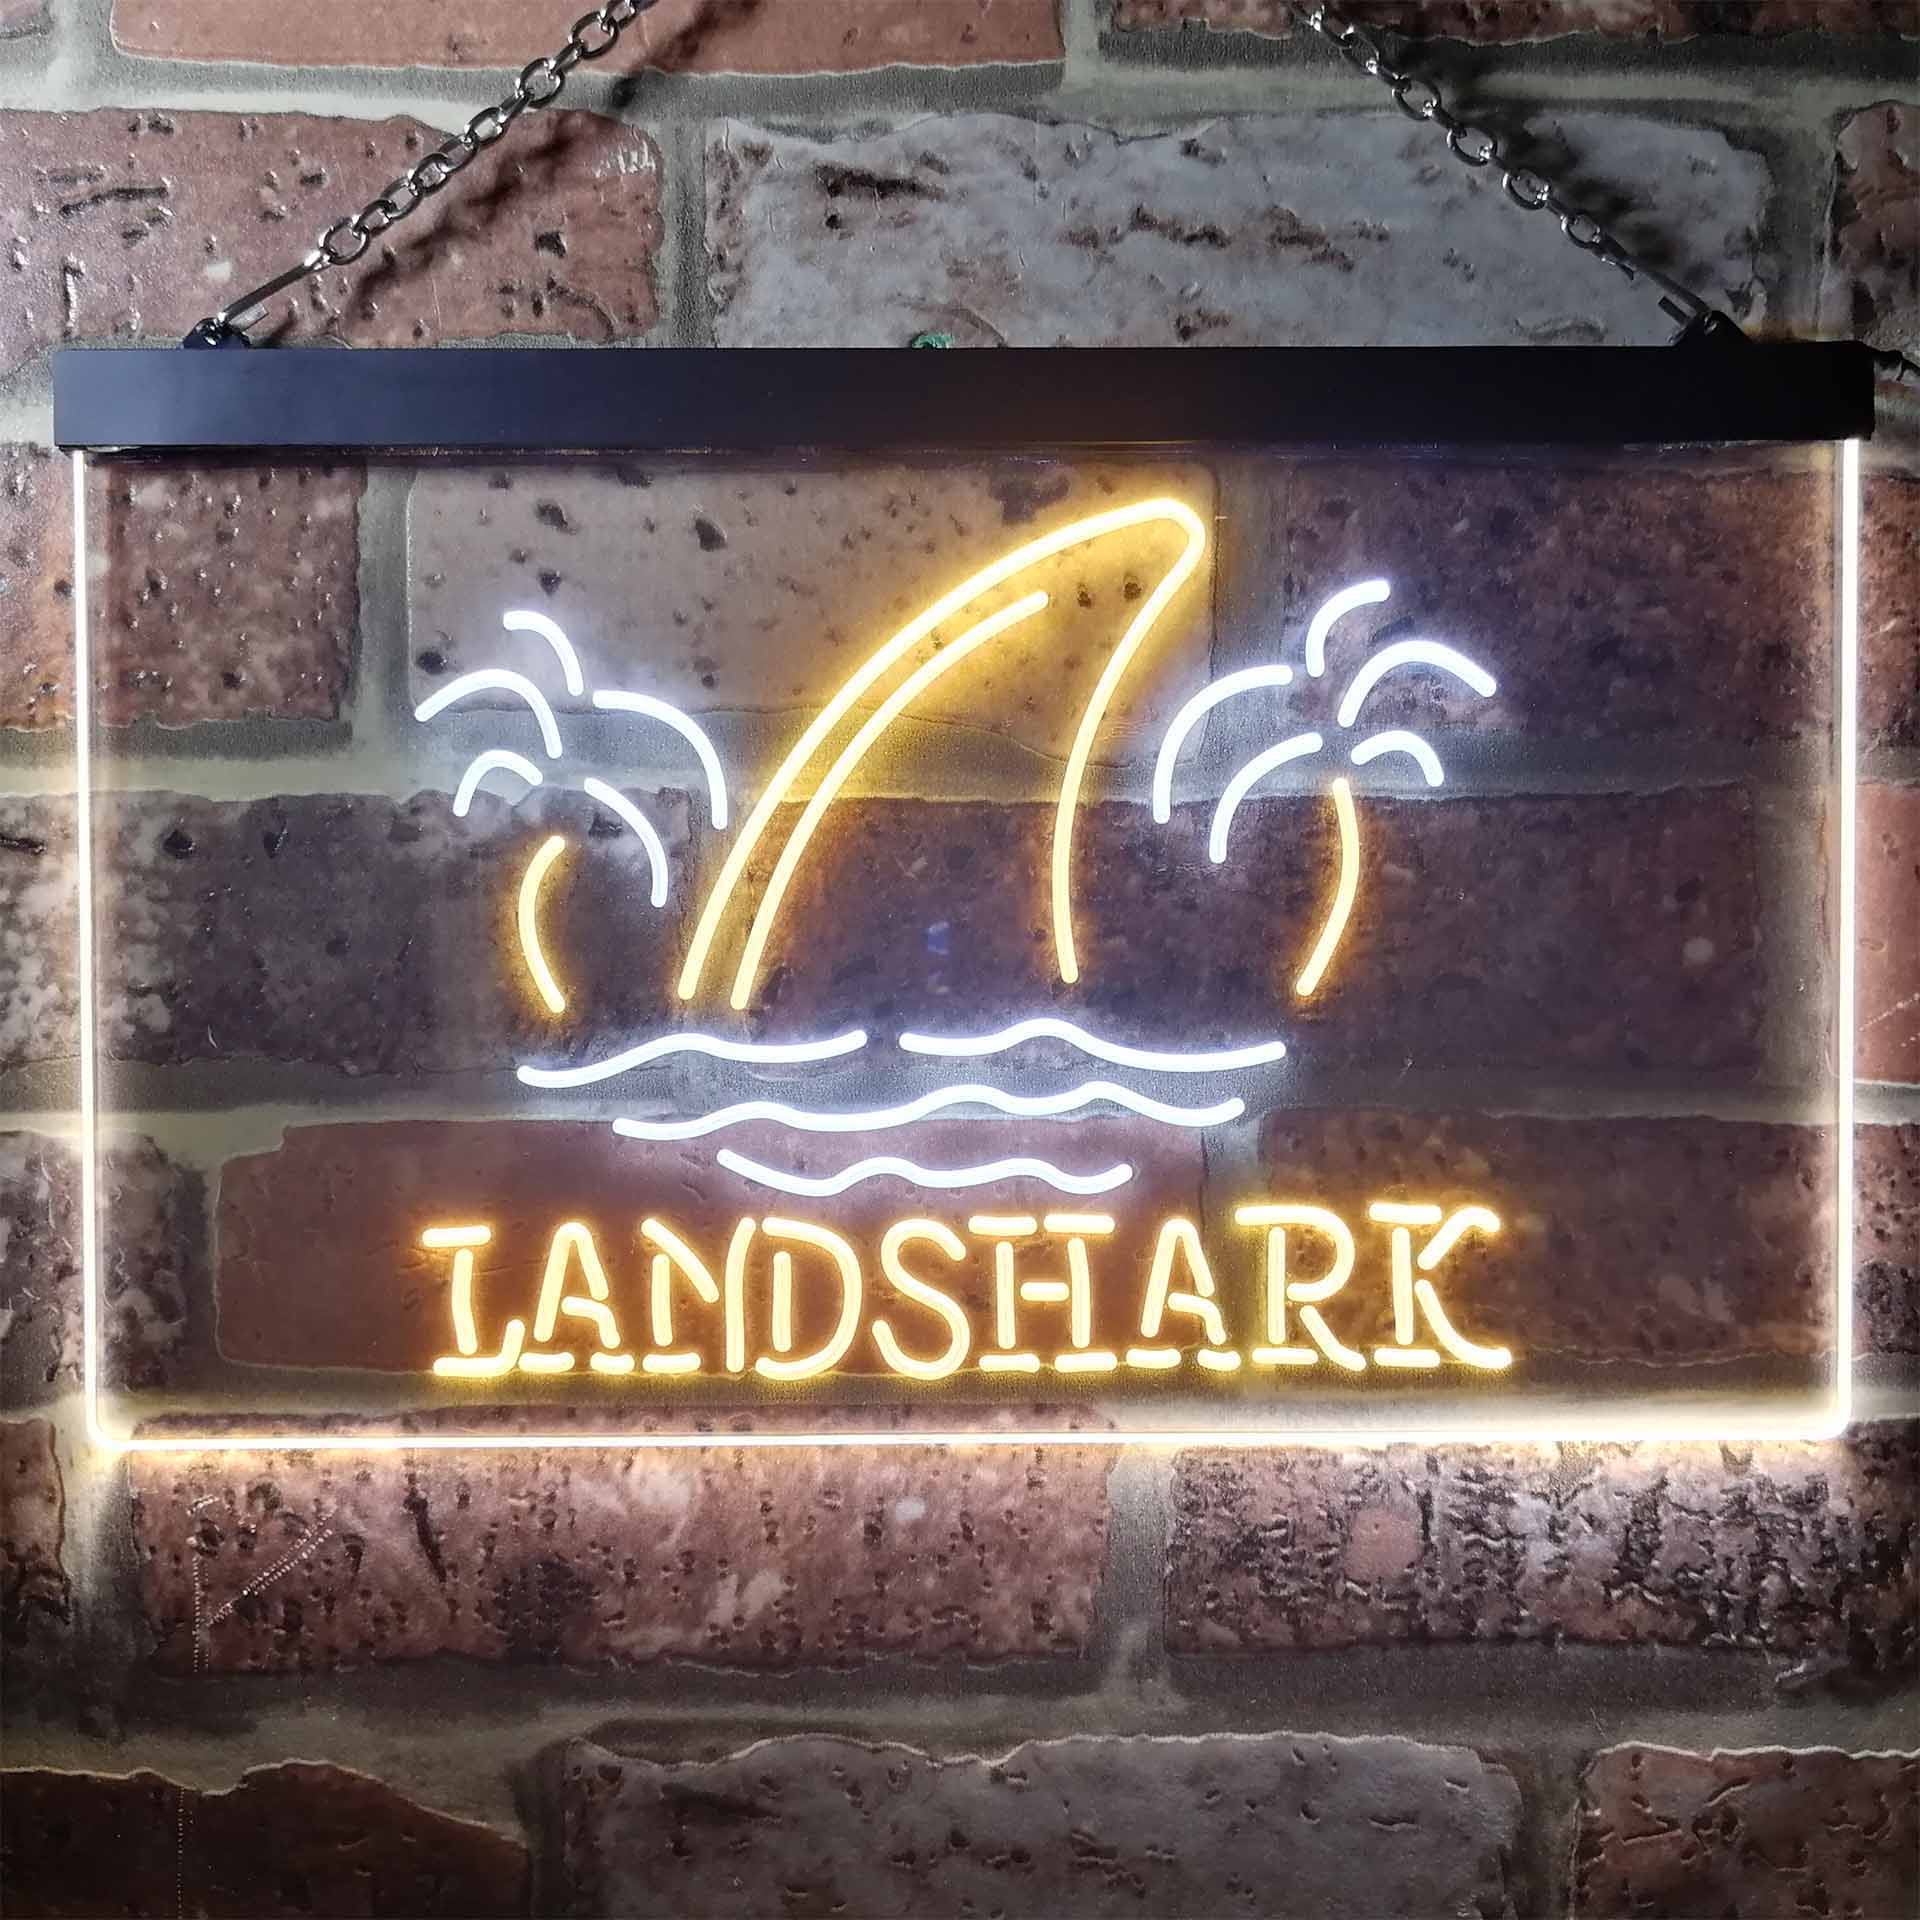 Landshark Palm Tree Island Neon LED Sign